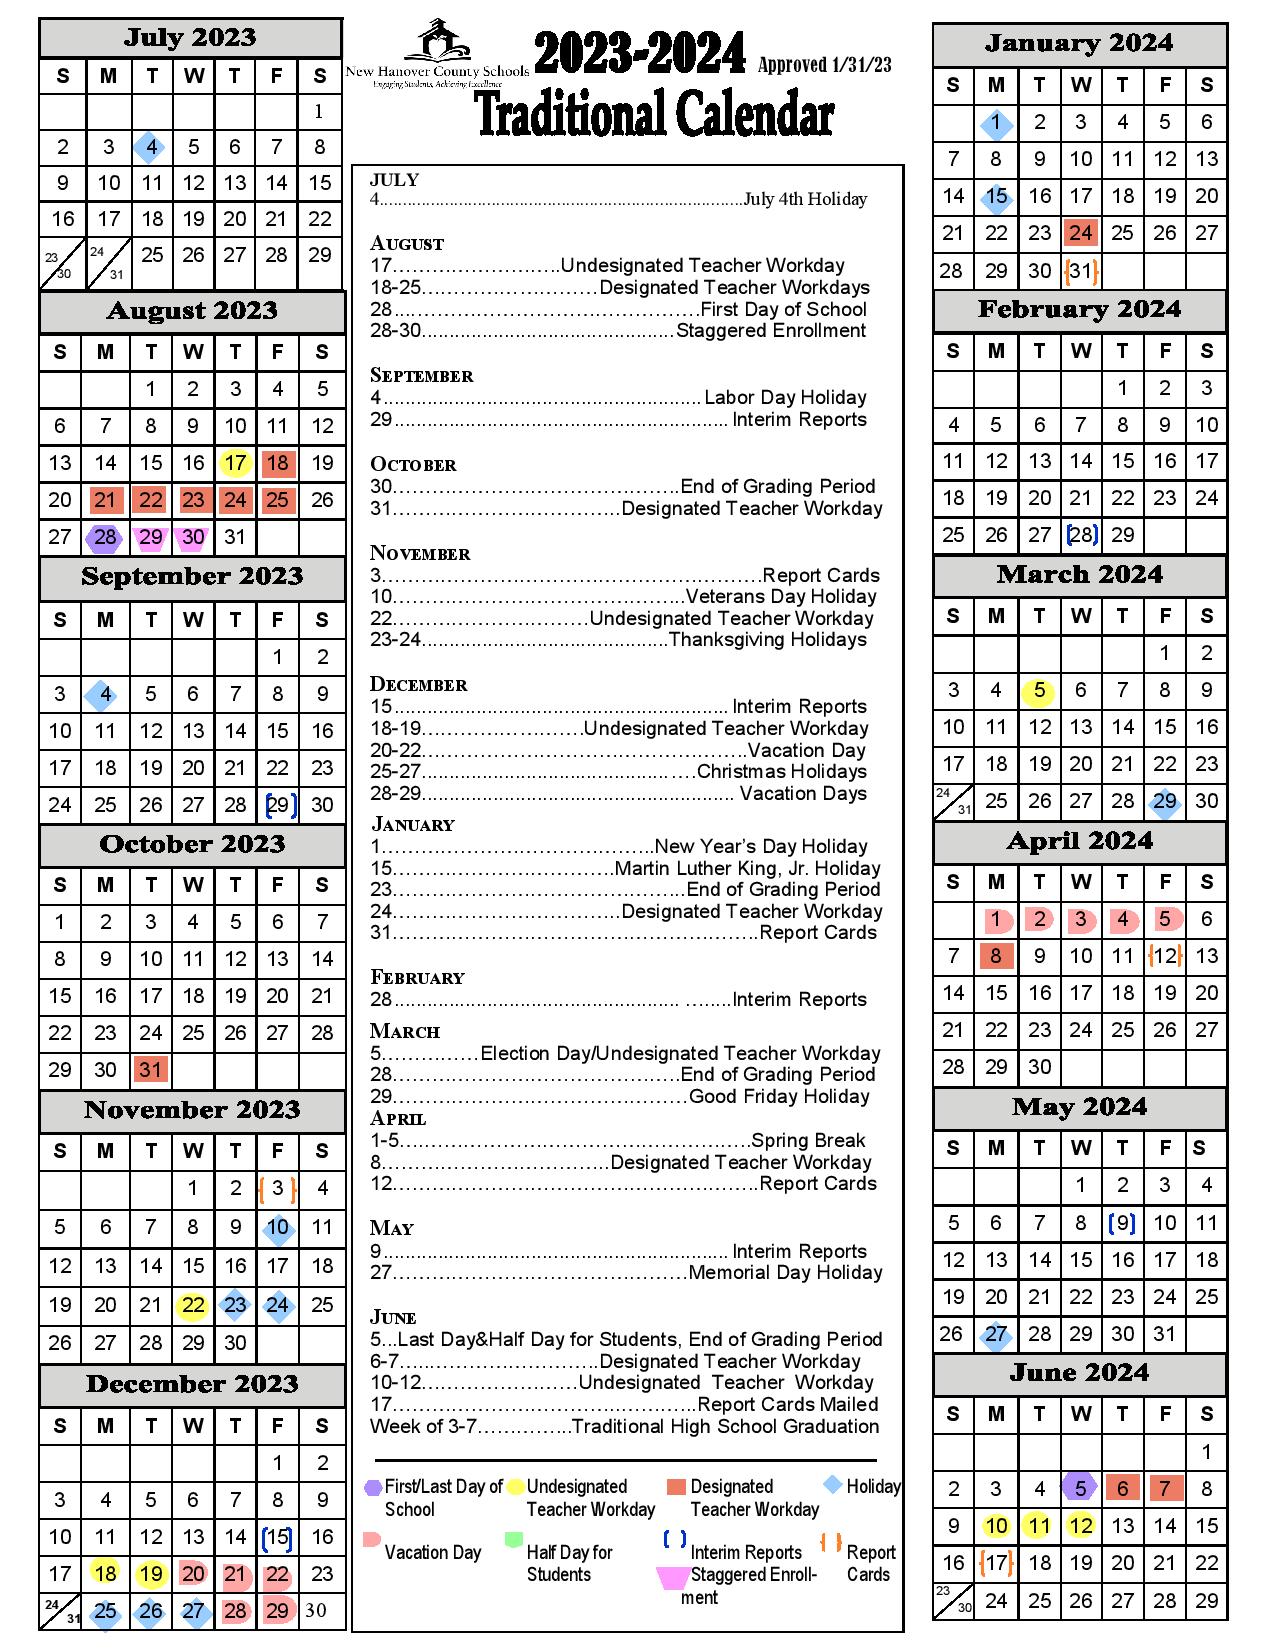 New Hanover County Schools Calendar 2023 2024 in PDF